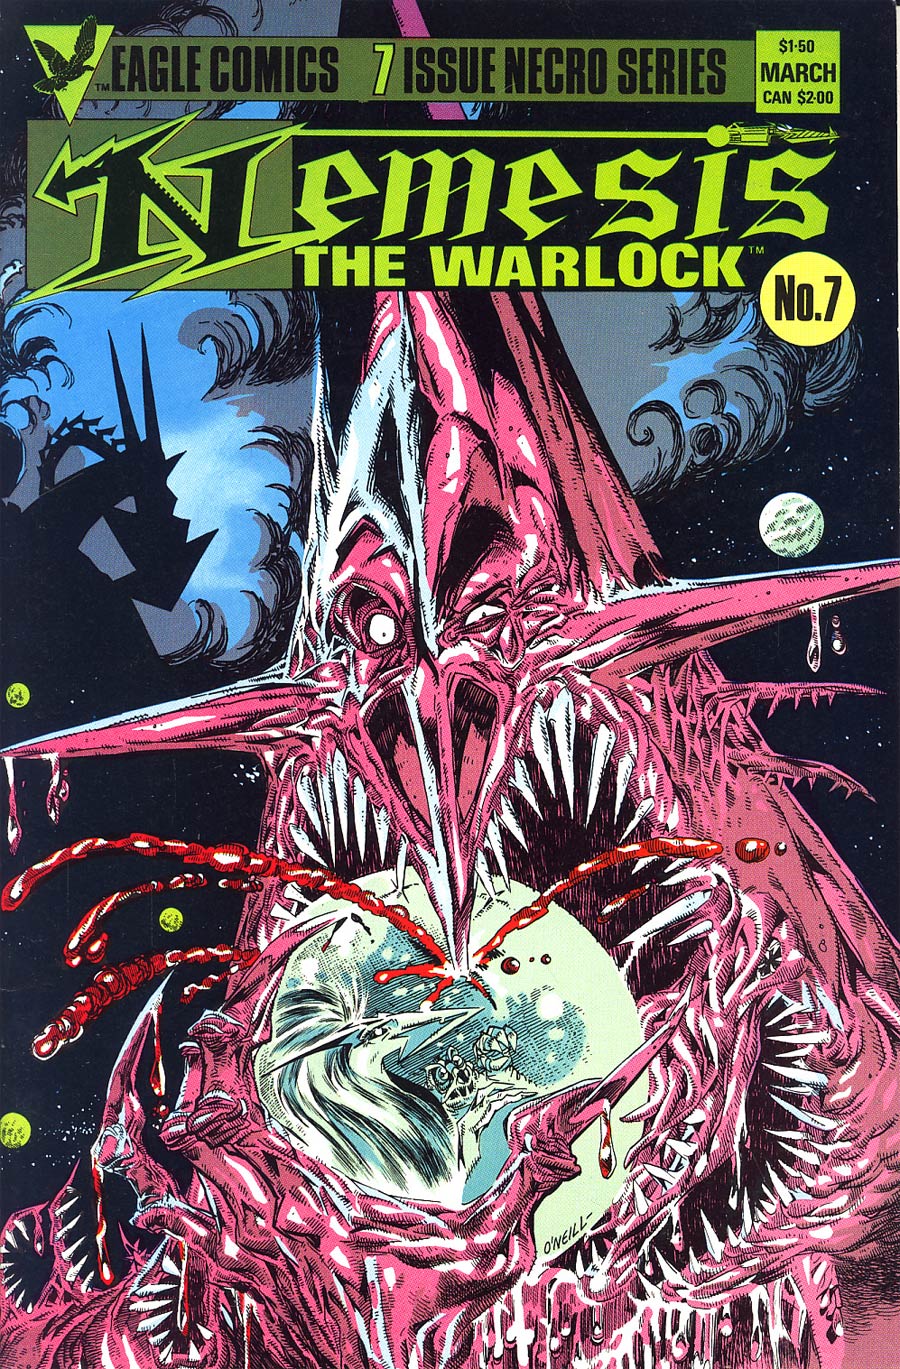 Nemesis The Warlock (Eagle Comics) #7